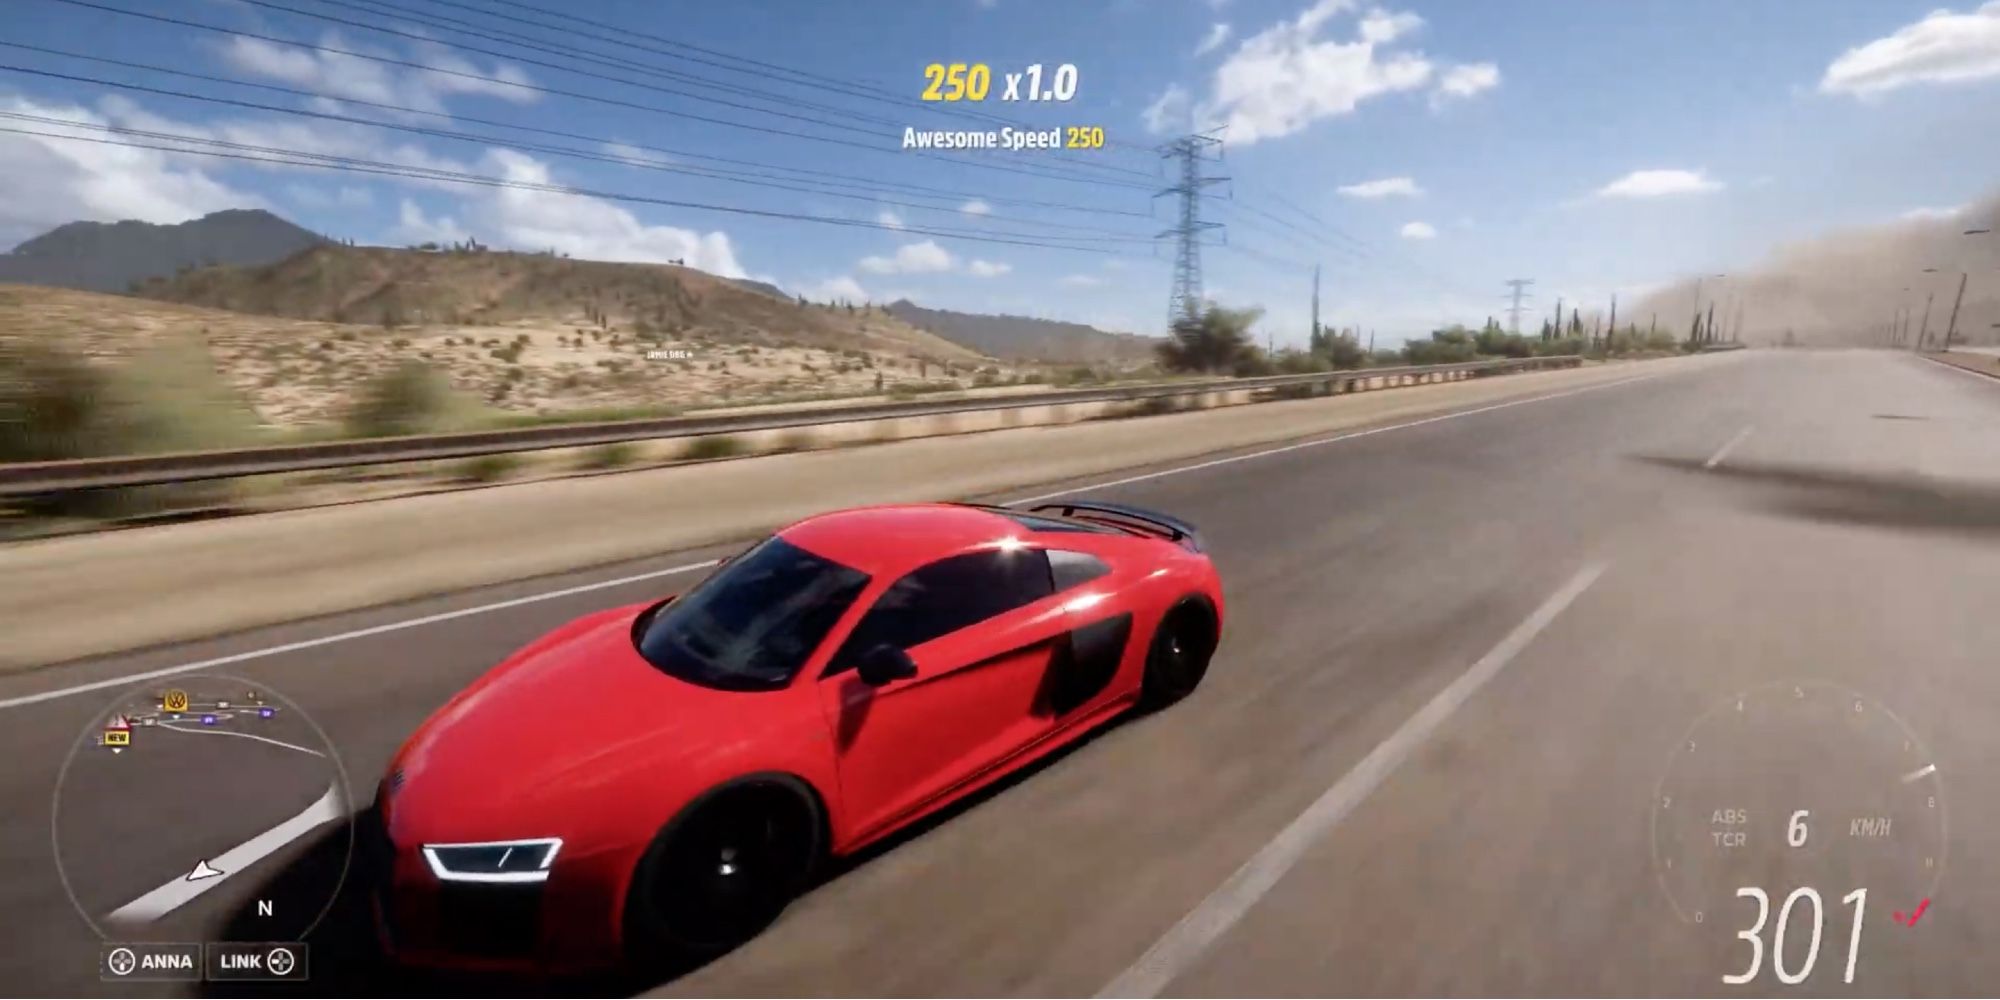 Forza Horizon 5 - Audi R8 V10 Plus - Player drives a super car with a 5.2 litre engine